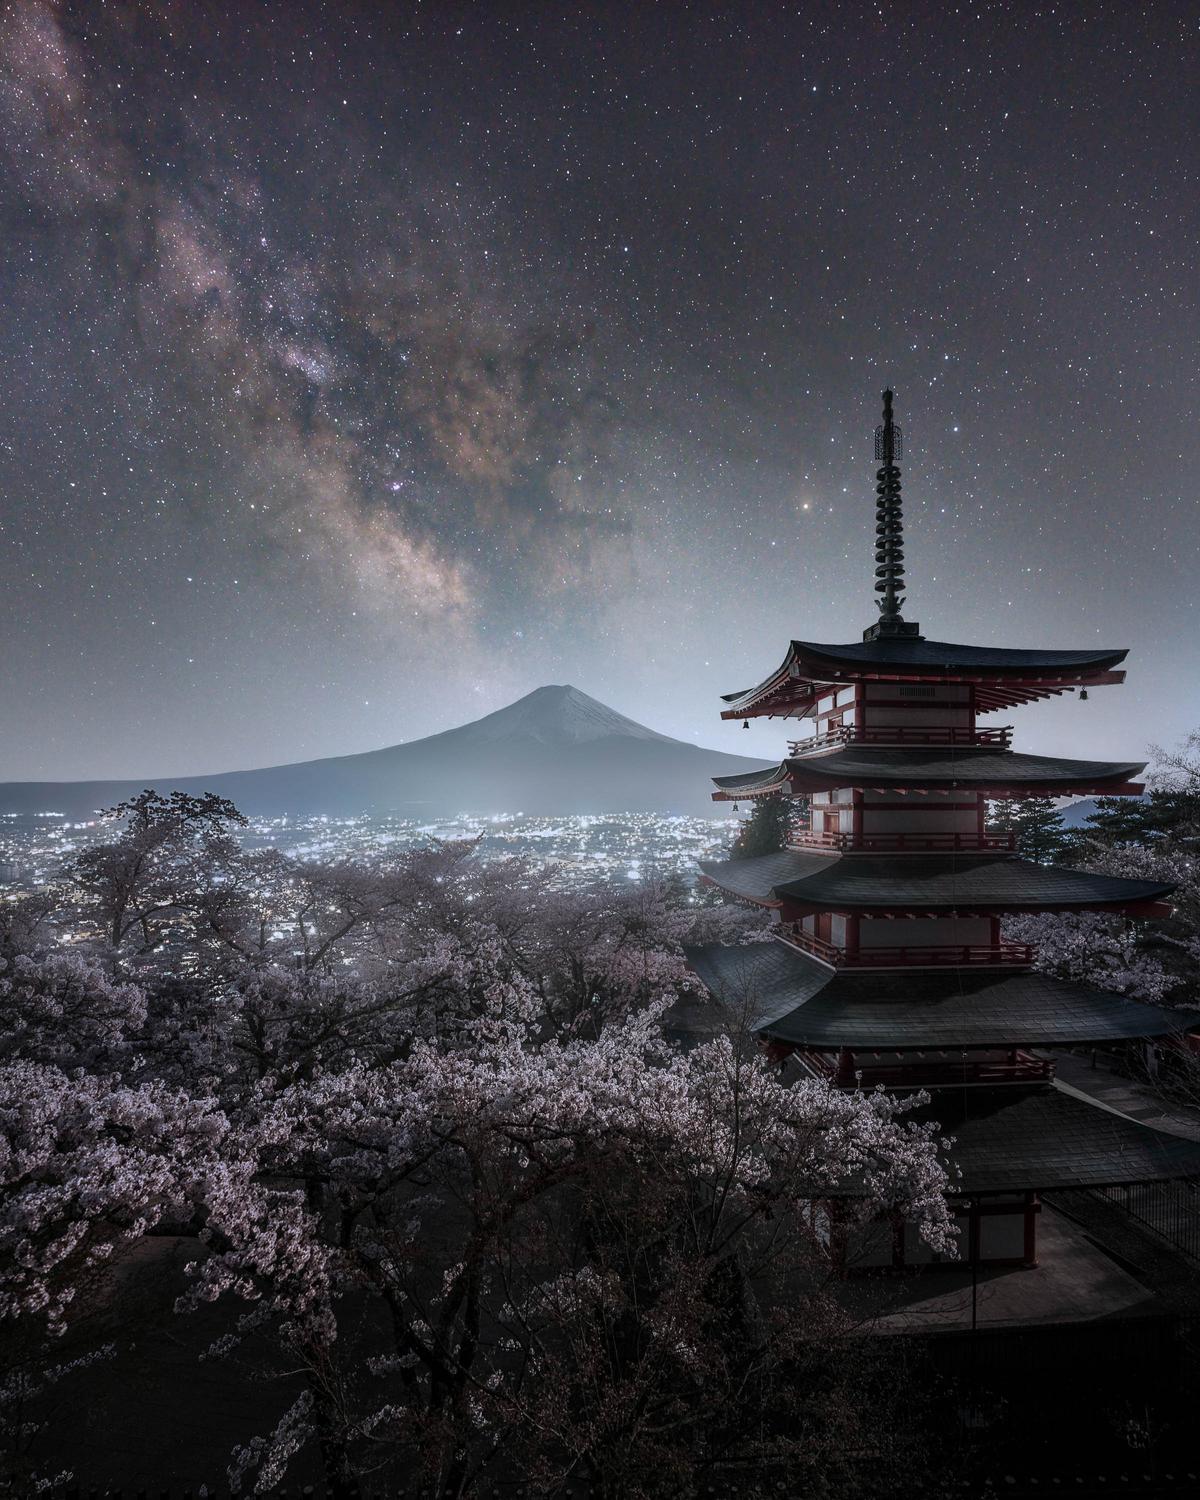 “The Scenery I Wanted to See” by Mitsuhiro Okabe. (Courtesy of Mitsuhiro Okabe)